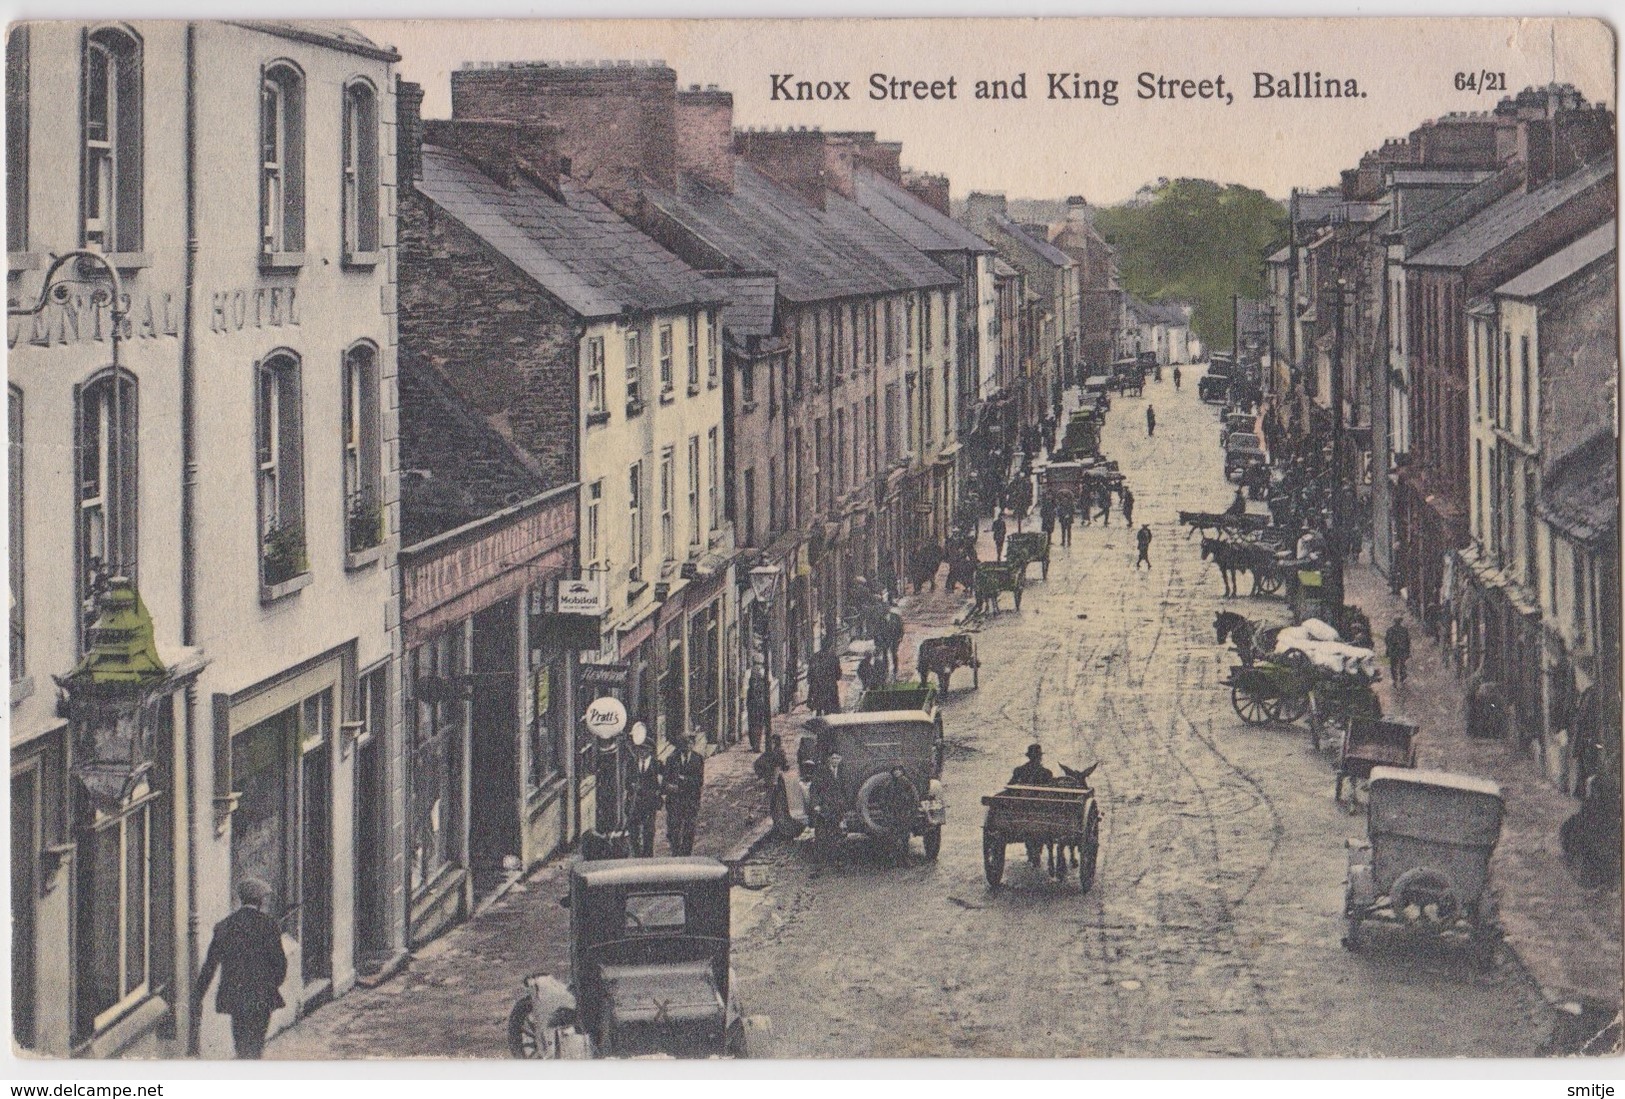 BALLINA MAYO 1910-1920's KNOX STREET AND KING STREET WITH OLDTIMER CARS HORSES CENTRAL HOTEL ETC. - Mayo